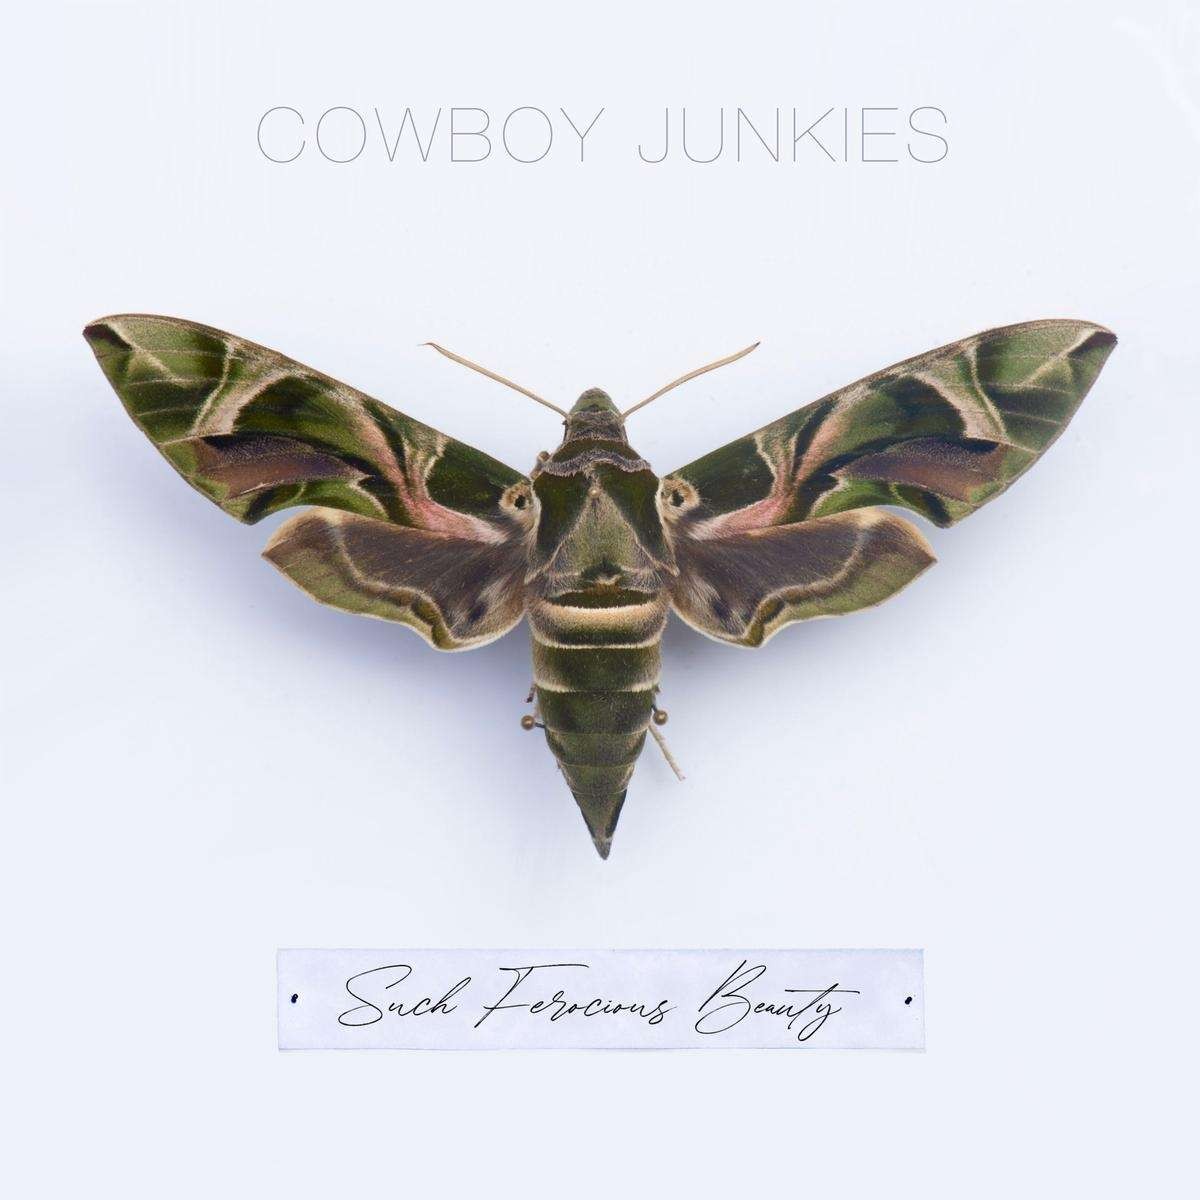 Cowboy Junkies: Such Ferocious Beauty (CD)